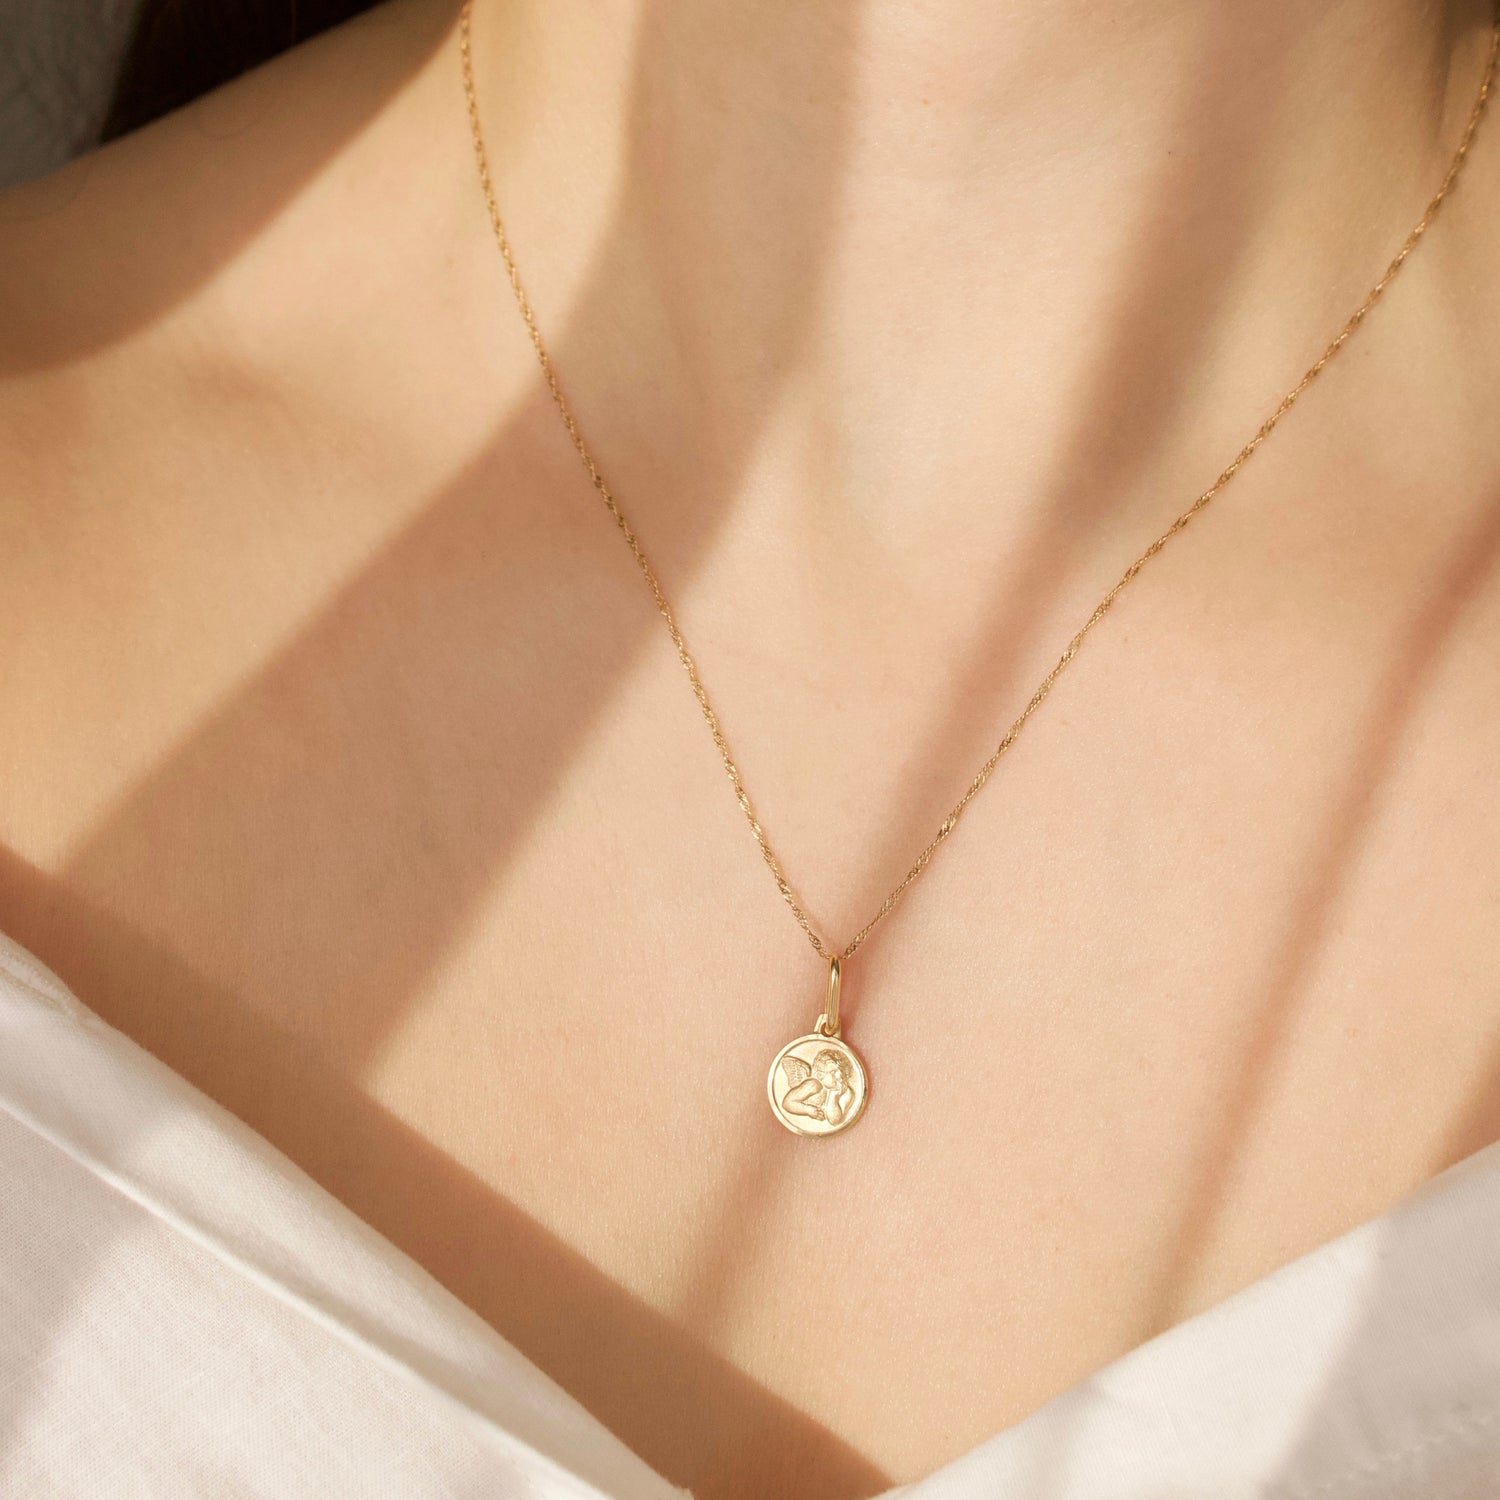 Guardian Angel Pendant in 9k Solid Gold - Necklace - Carrie Elizabeth